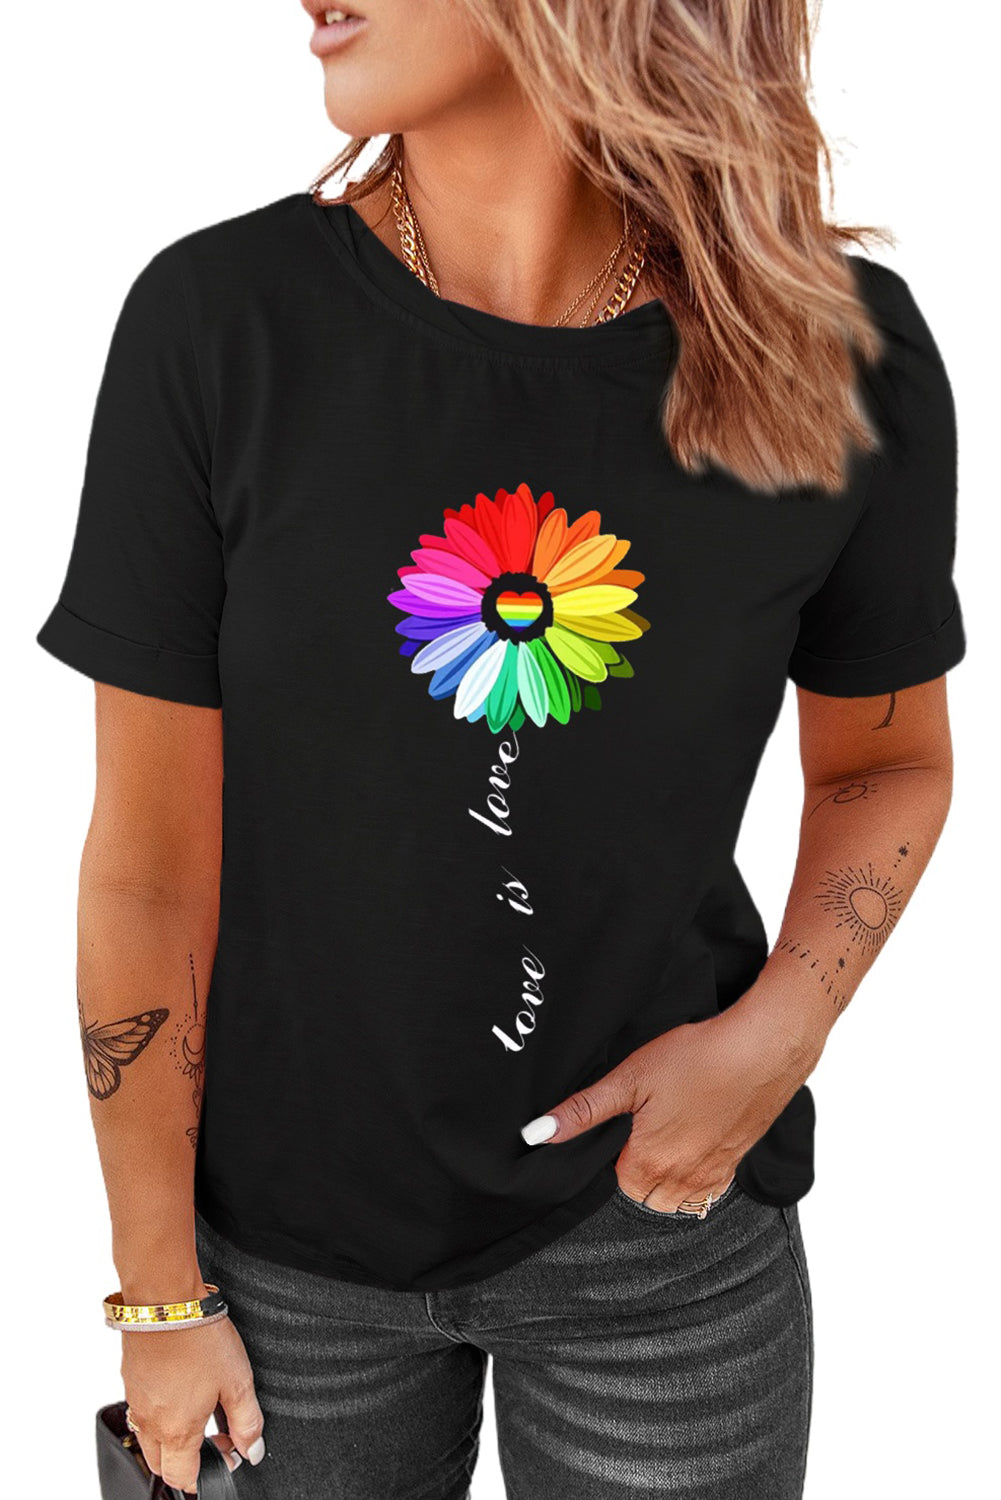 LC25216190-2-S, LC25216190-2-M, LC25216190-2-L, LC25216190-2-XL, LC25216190-2-2XL, Black Womens LGBT Gay Pride Tee Shirt Rainbow Color Daisy Graphic Casual Tee Shirts